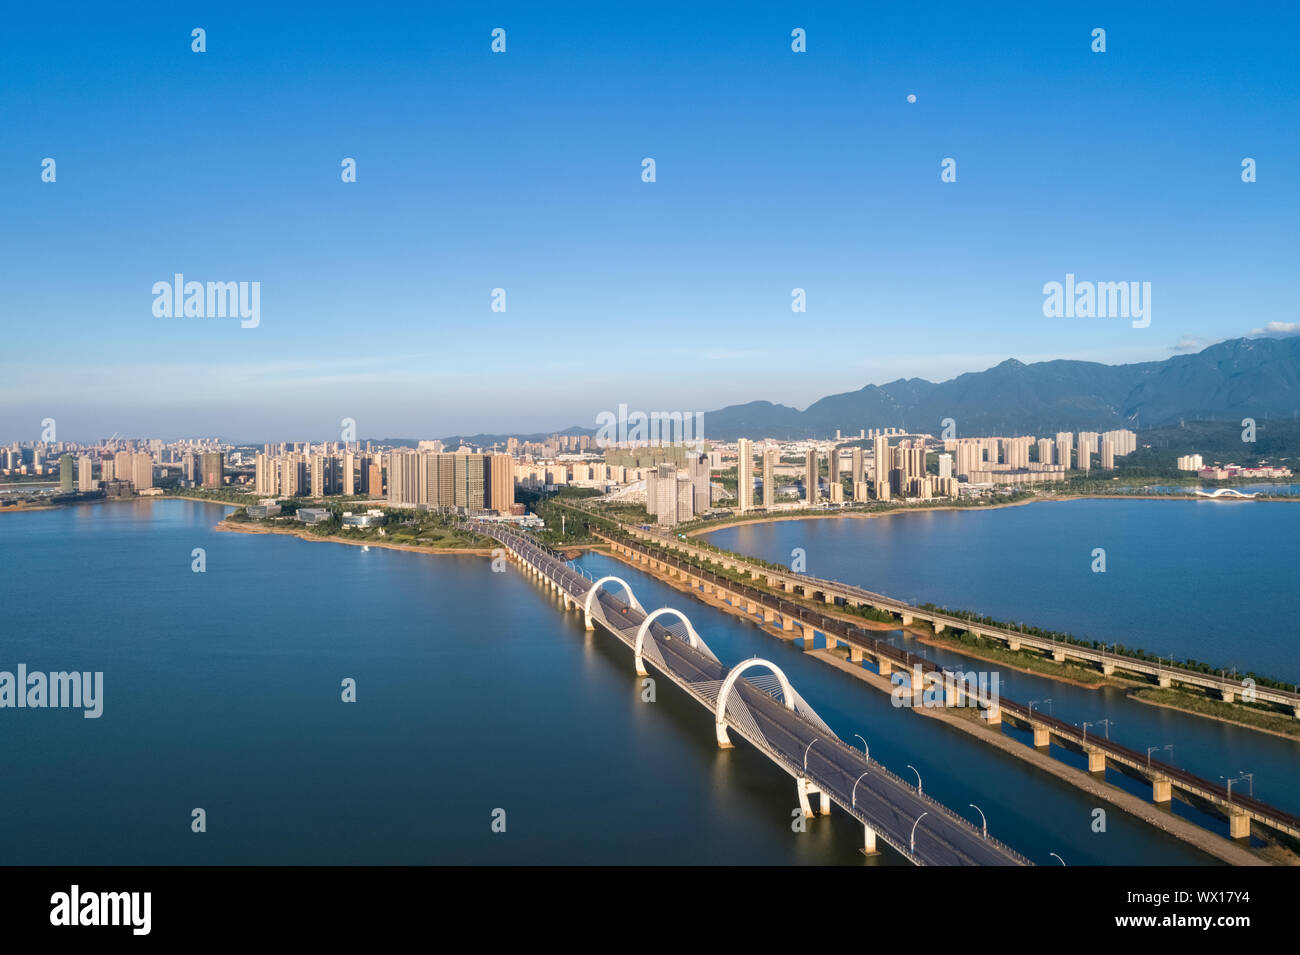 jiujiang city landscape Stock Photo